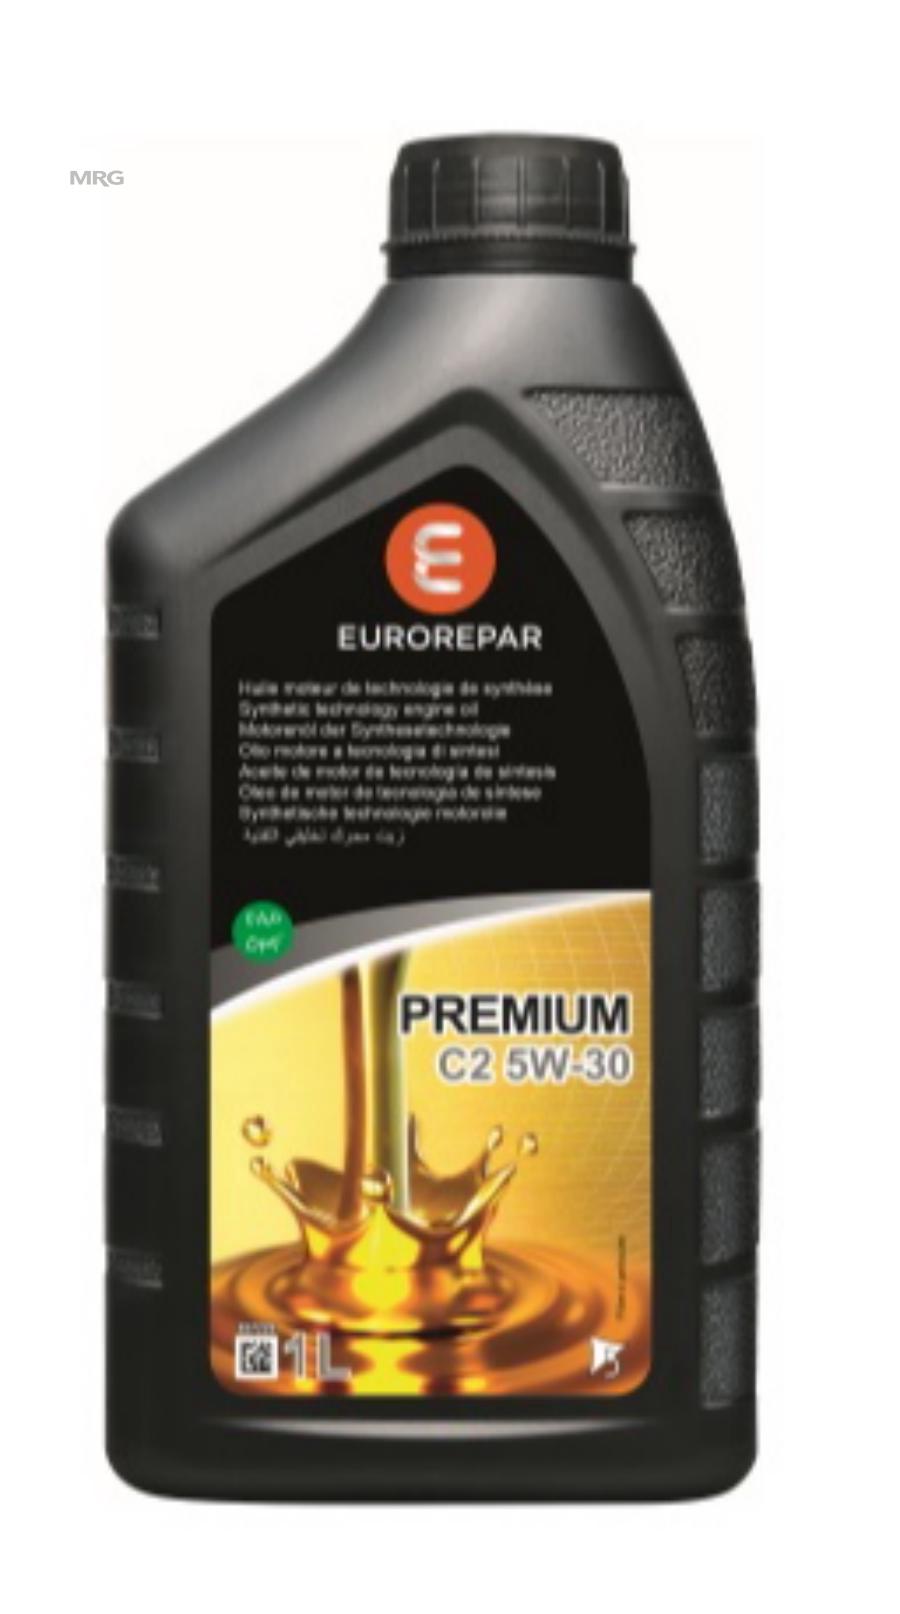 Еврорепар масло 5w30. Eurorepar Premium c3 5w30. Масло моторное Еврорепар 5w30. Масло Eurorepar protect c1 0w30. Масло Eurorepar 5w40.